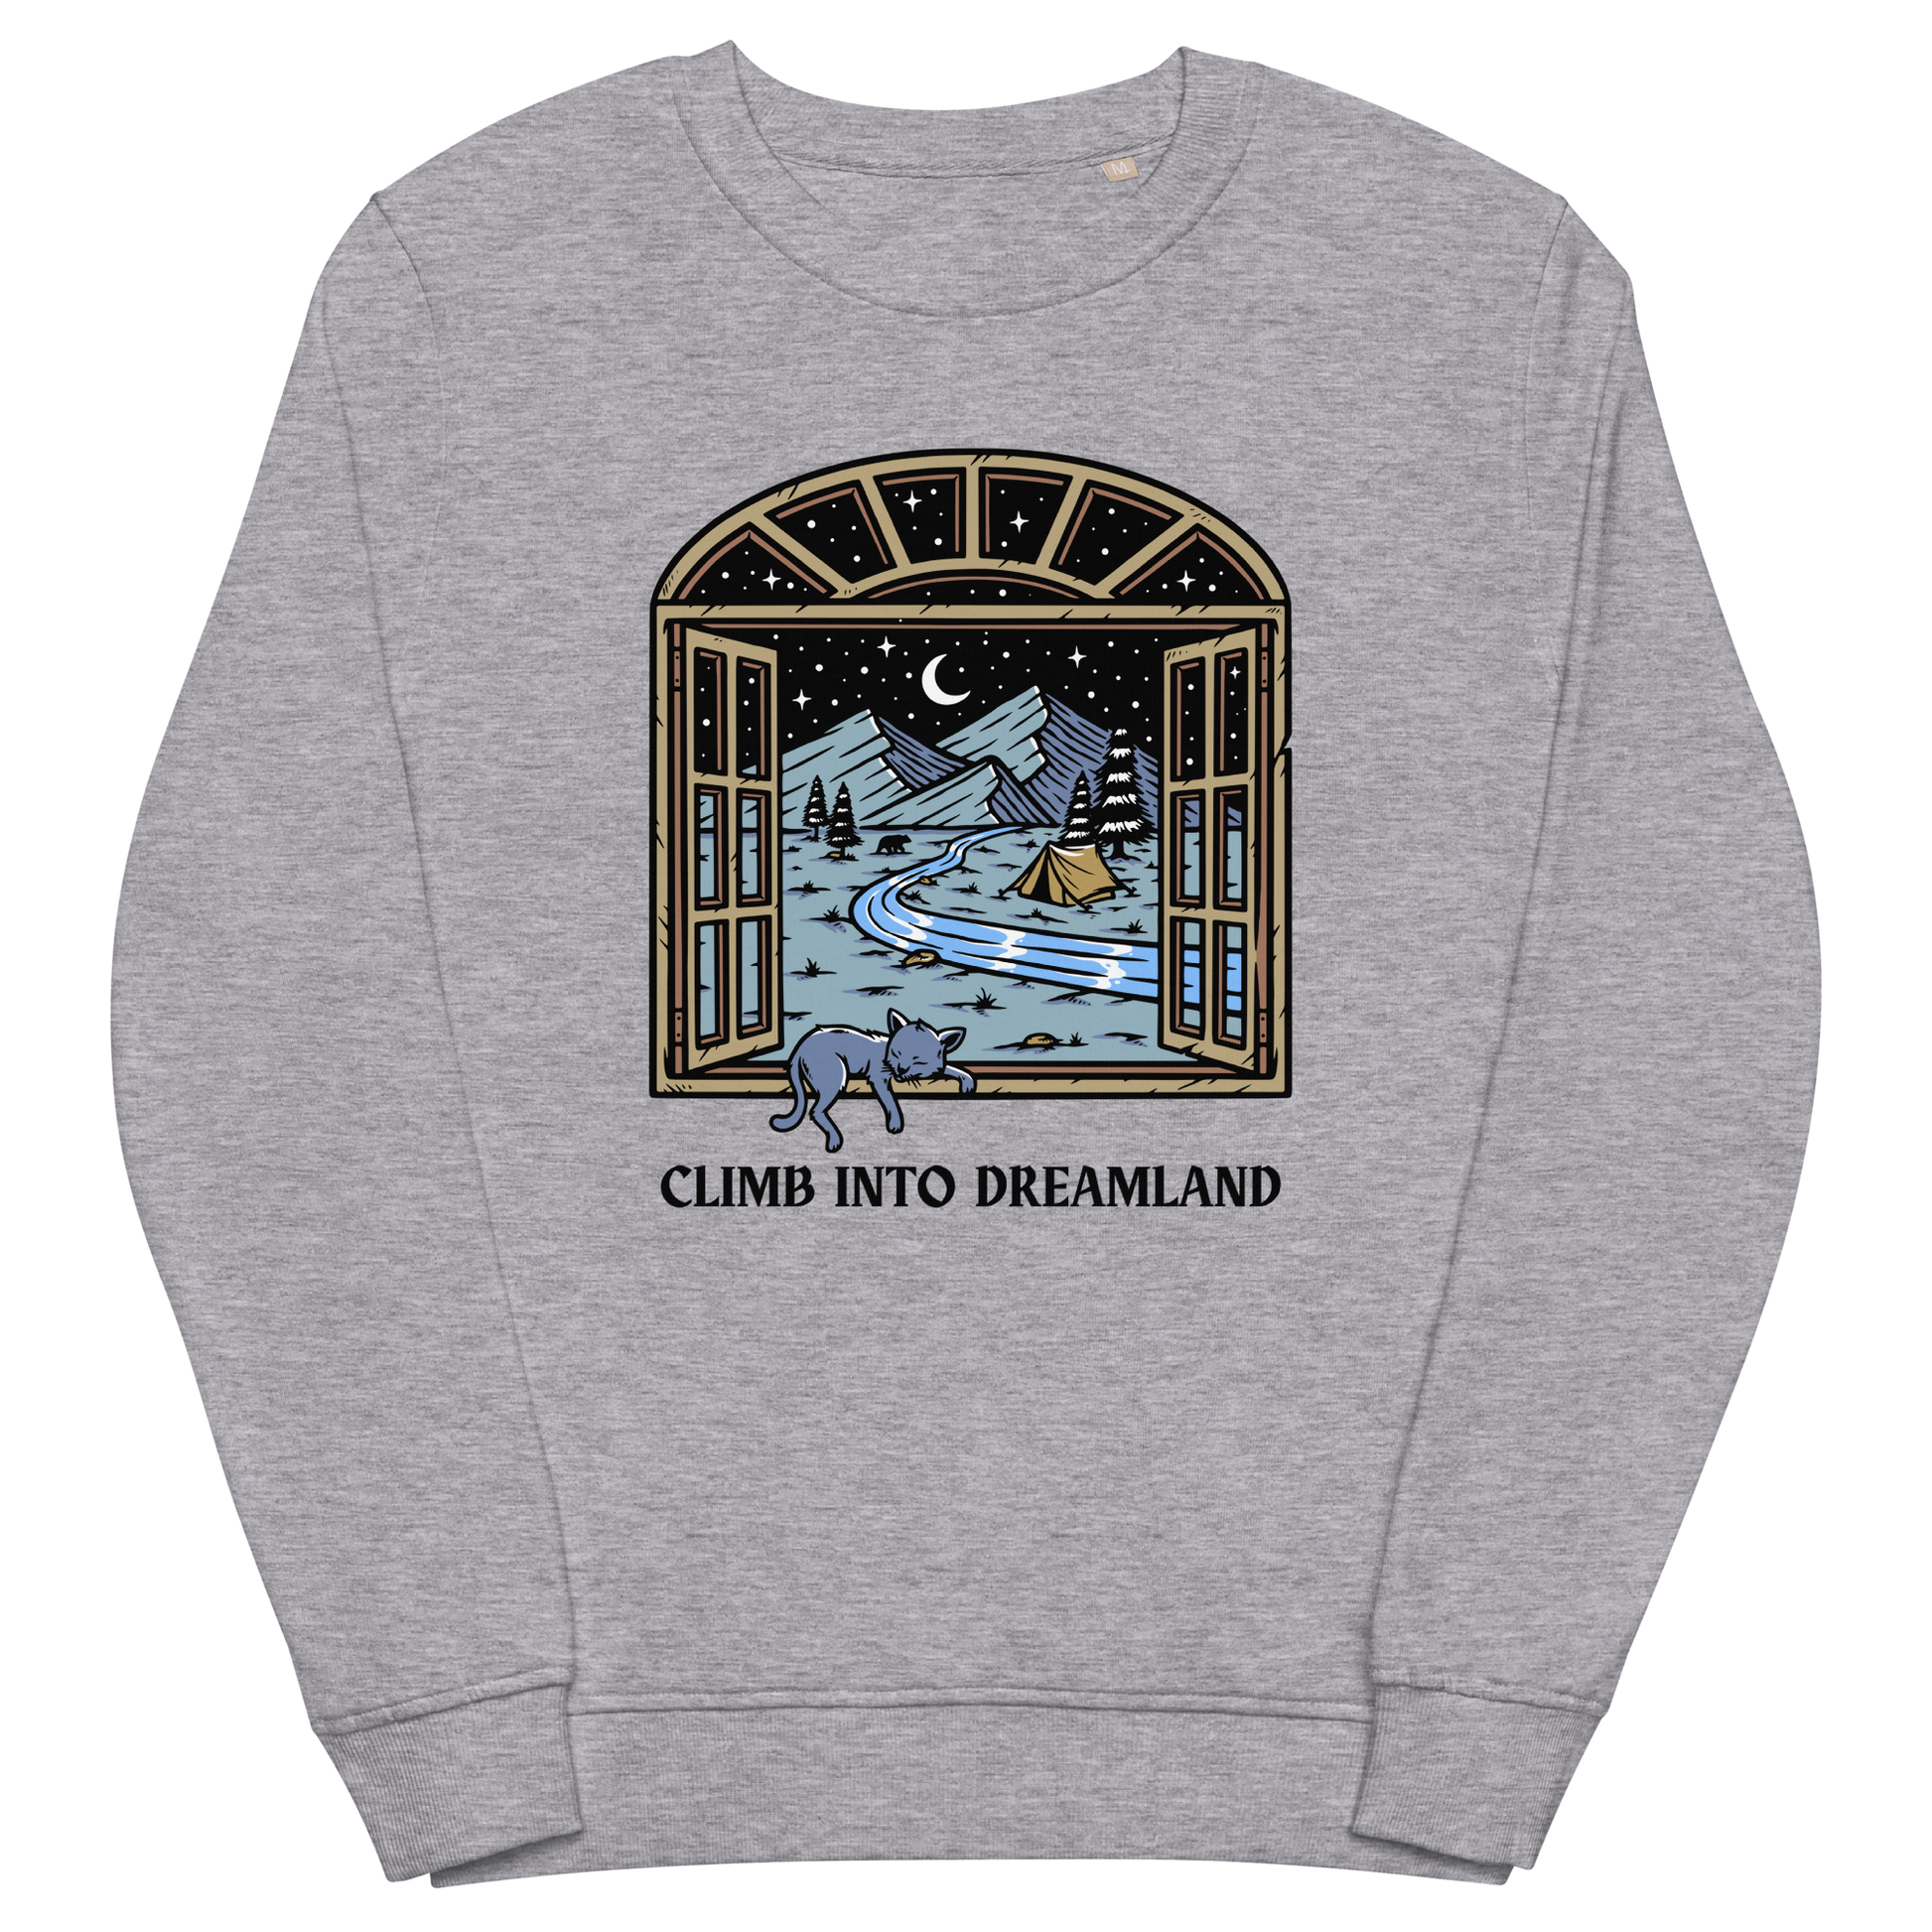 Grey Melange Organic Cotton Climb Into Dreamland Sweatshirt featuring a mesmerizing mountain view graphic on the chest - Cool Graphic Nature Sweatshirts - Boozy Fox